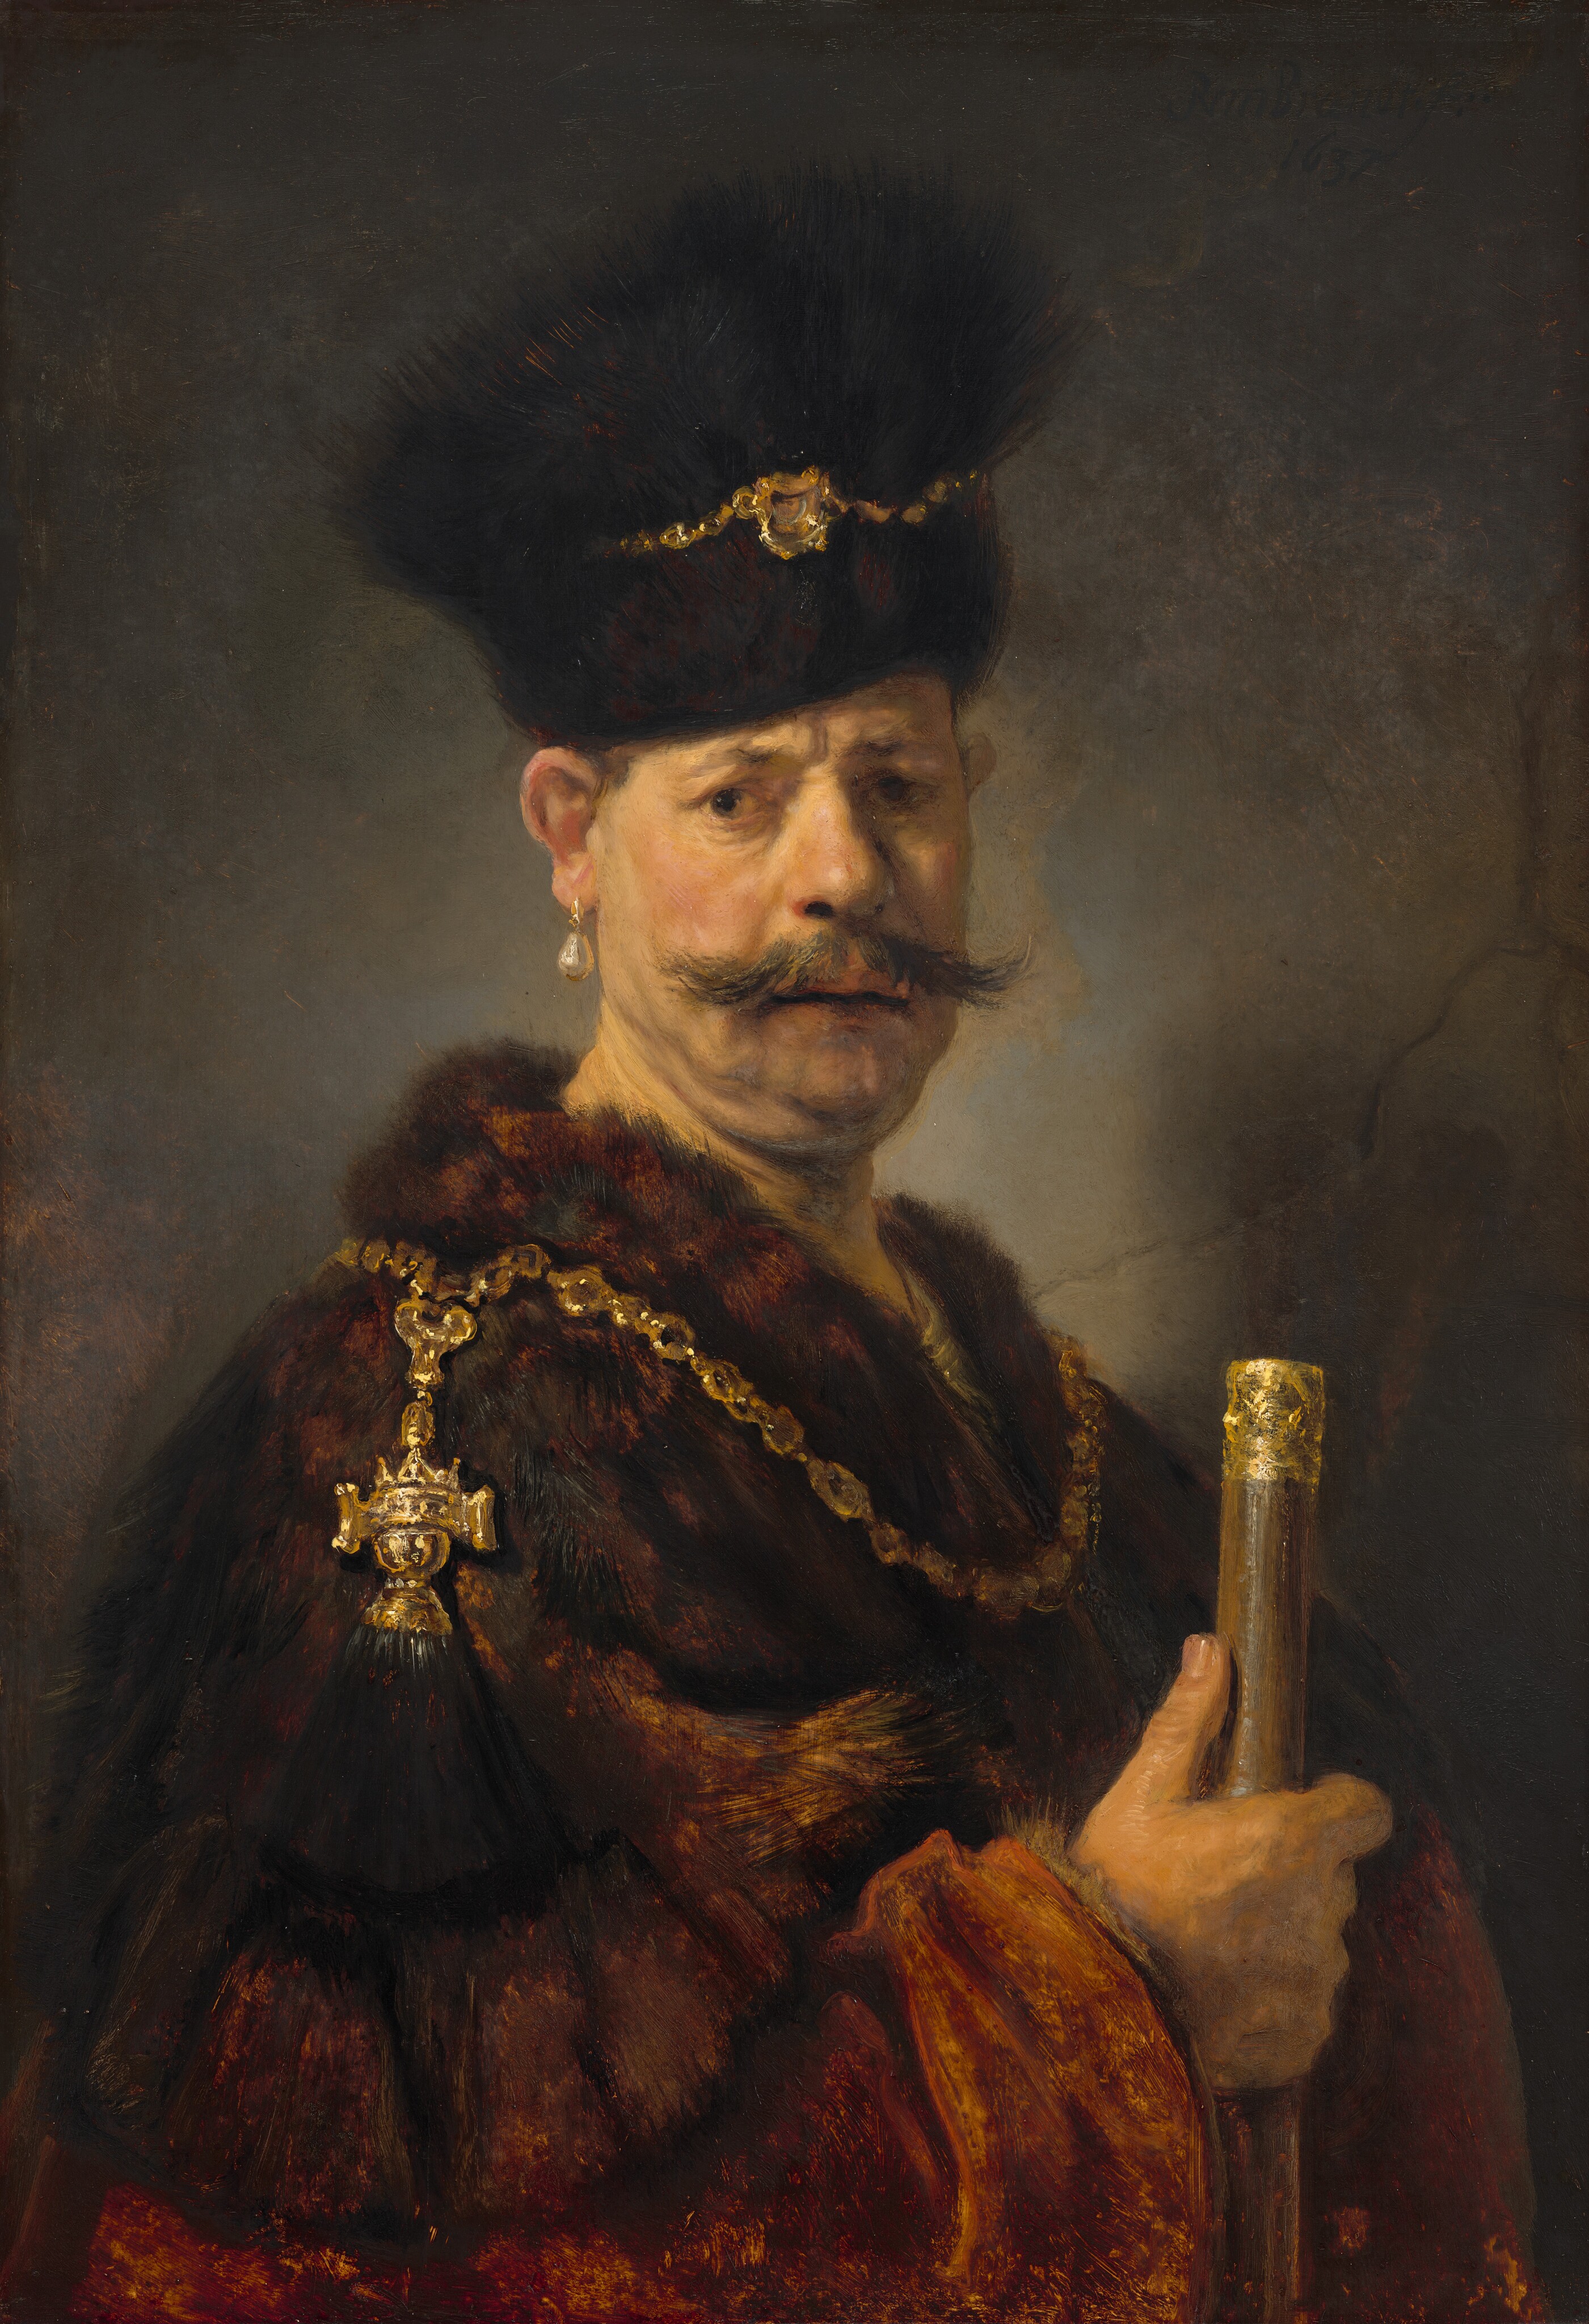 A Polish Nobleman by Rembrandt van Rijn - 1637 - 96.8 x 66 cm National Gallery of Art